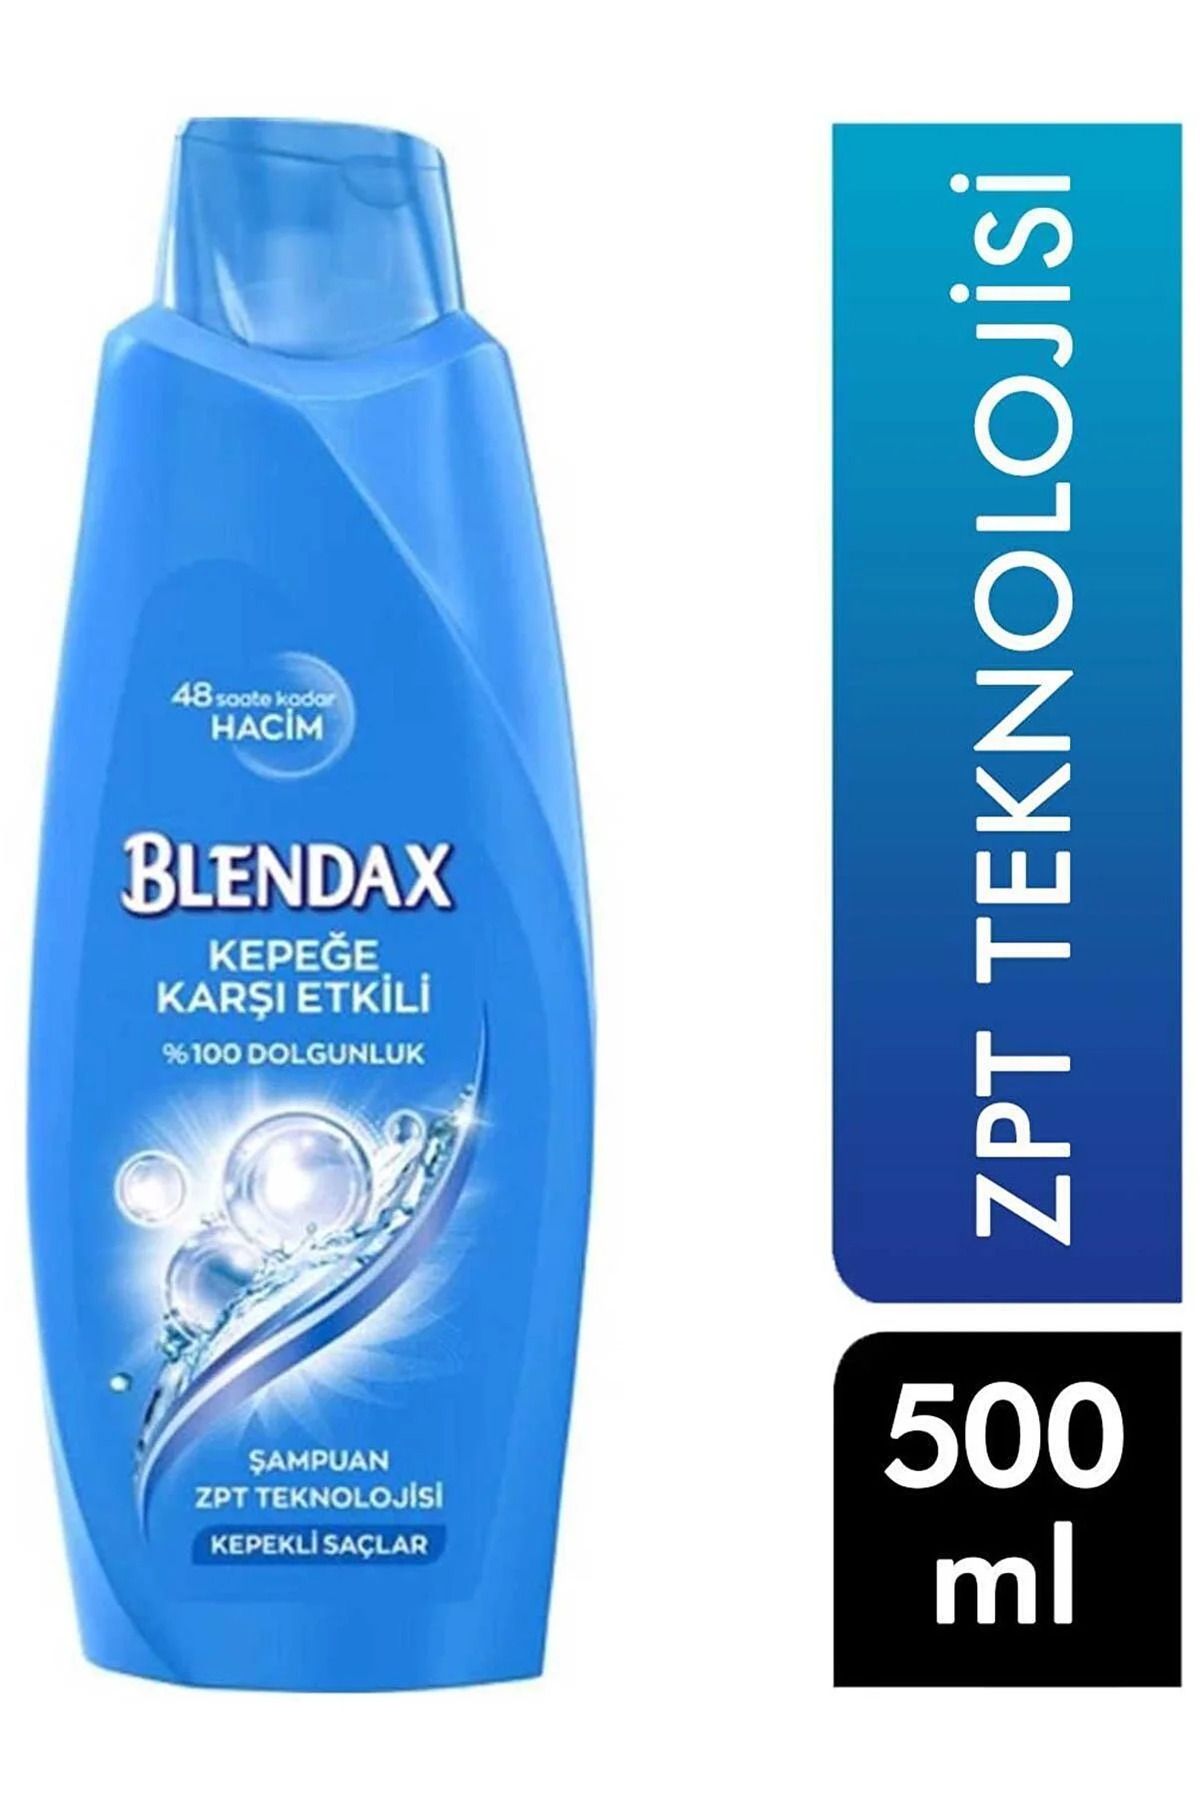 Blendax Kepeğe Karşi Etkili Şampuan 500 ml